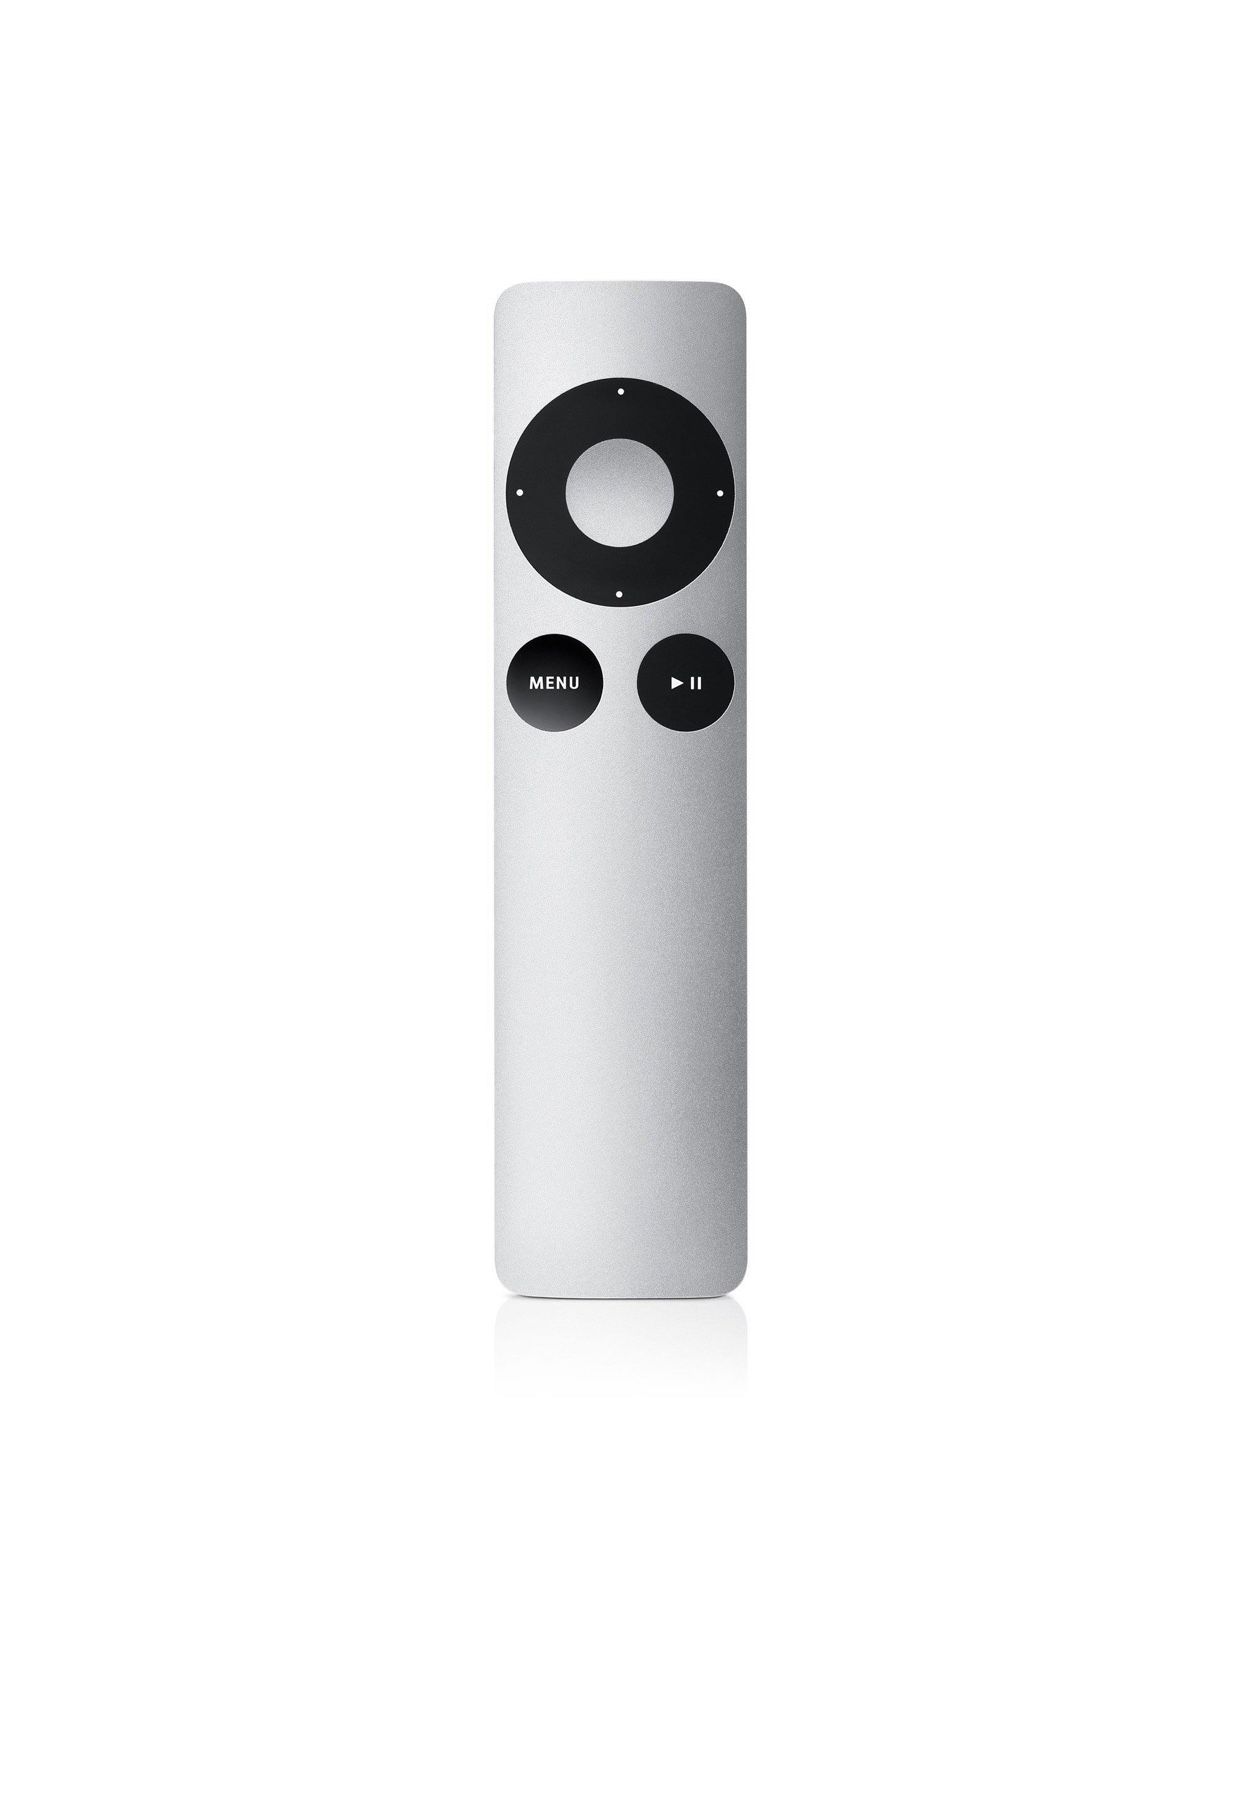 Apple TV remote 3rd Generation